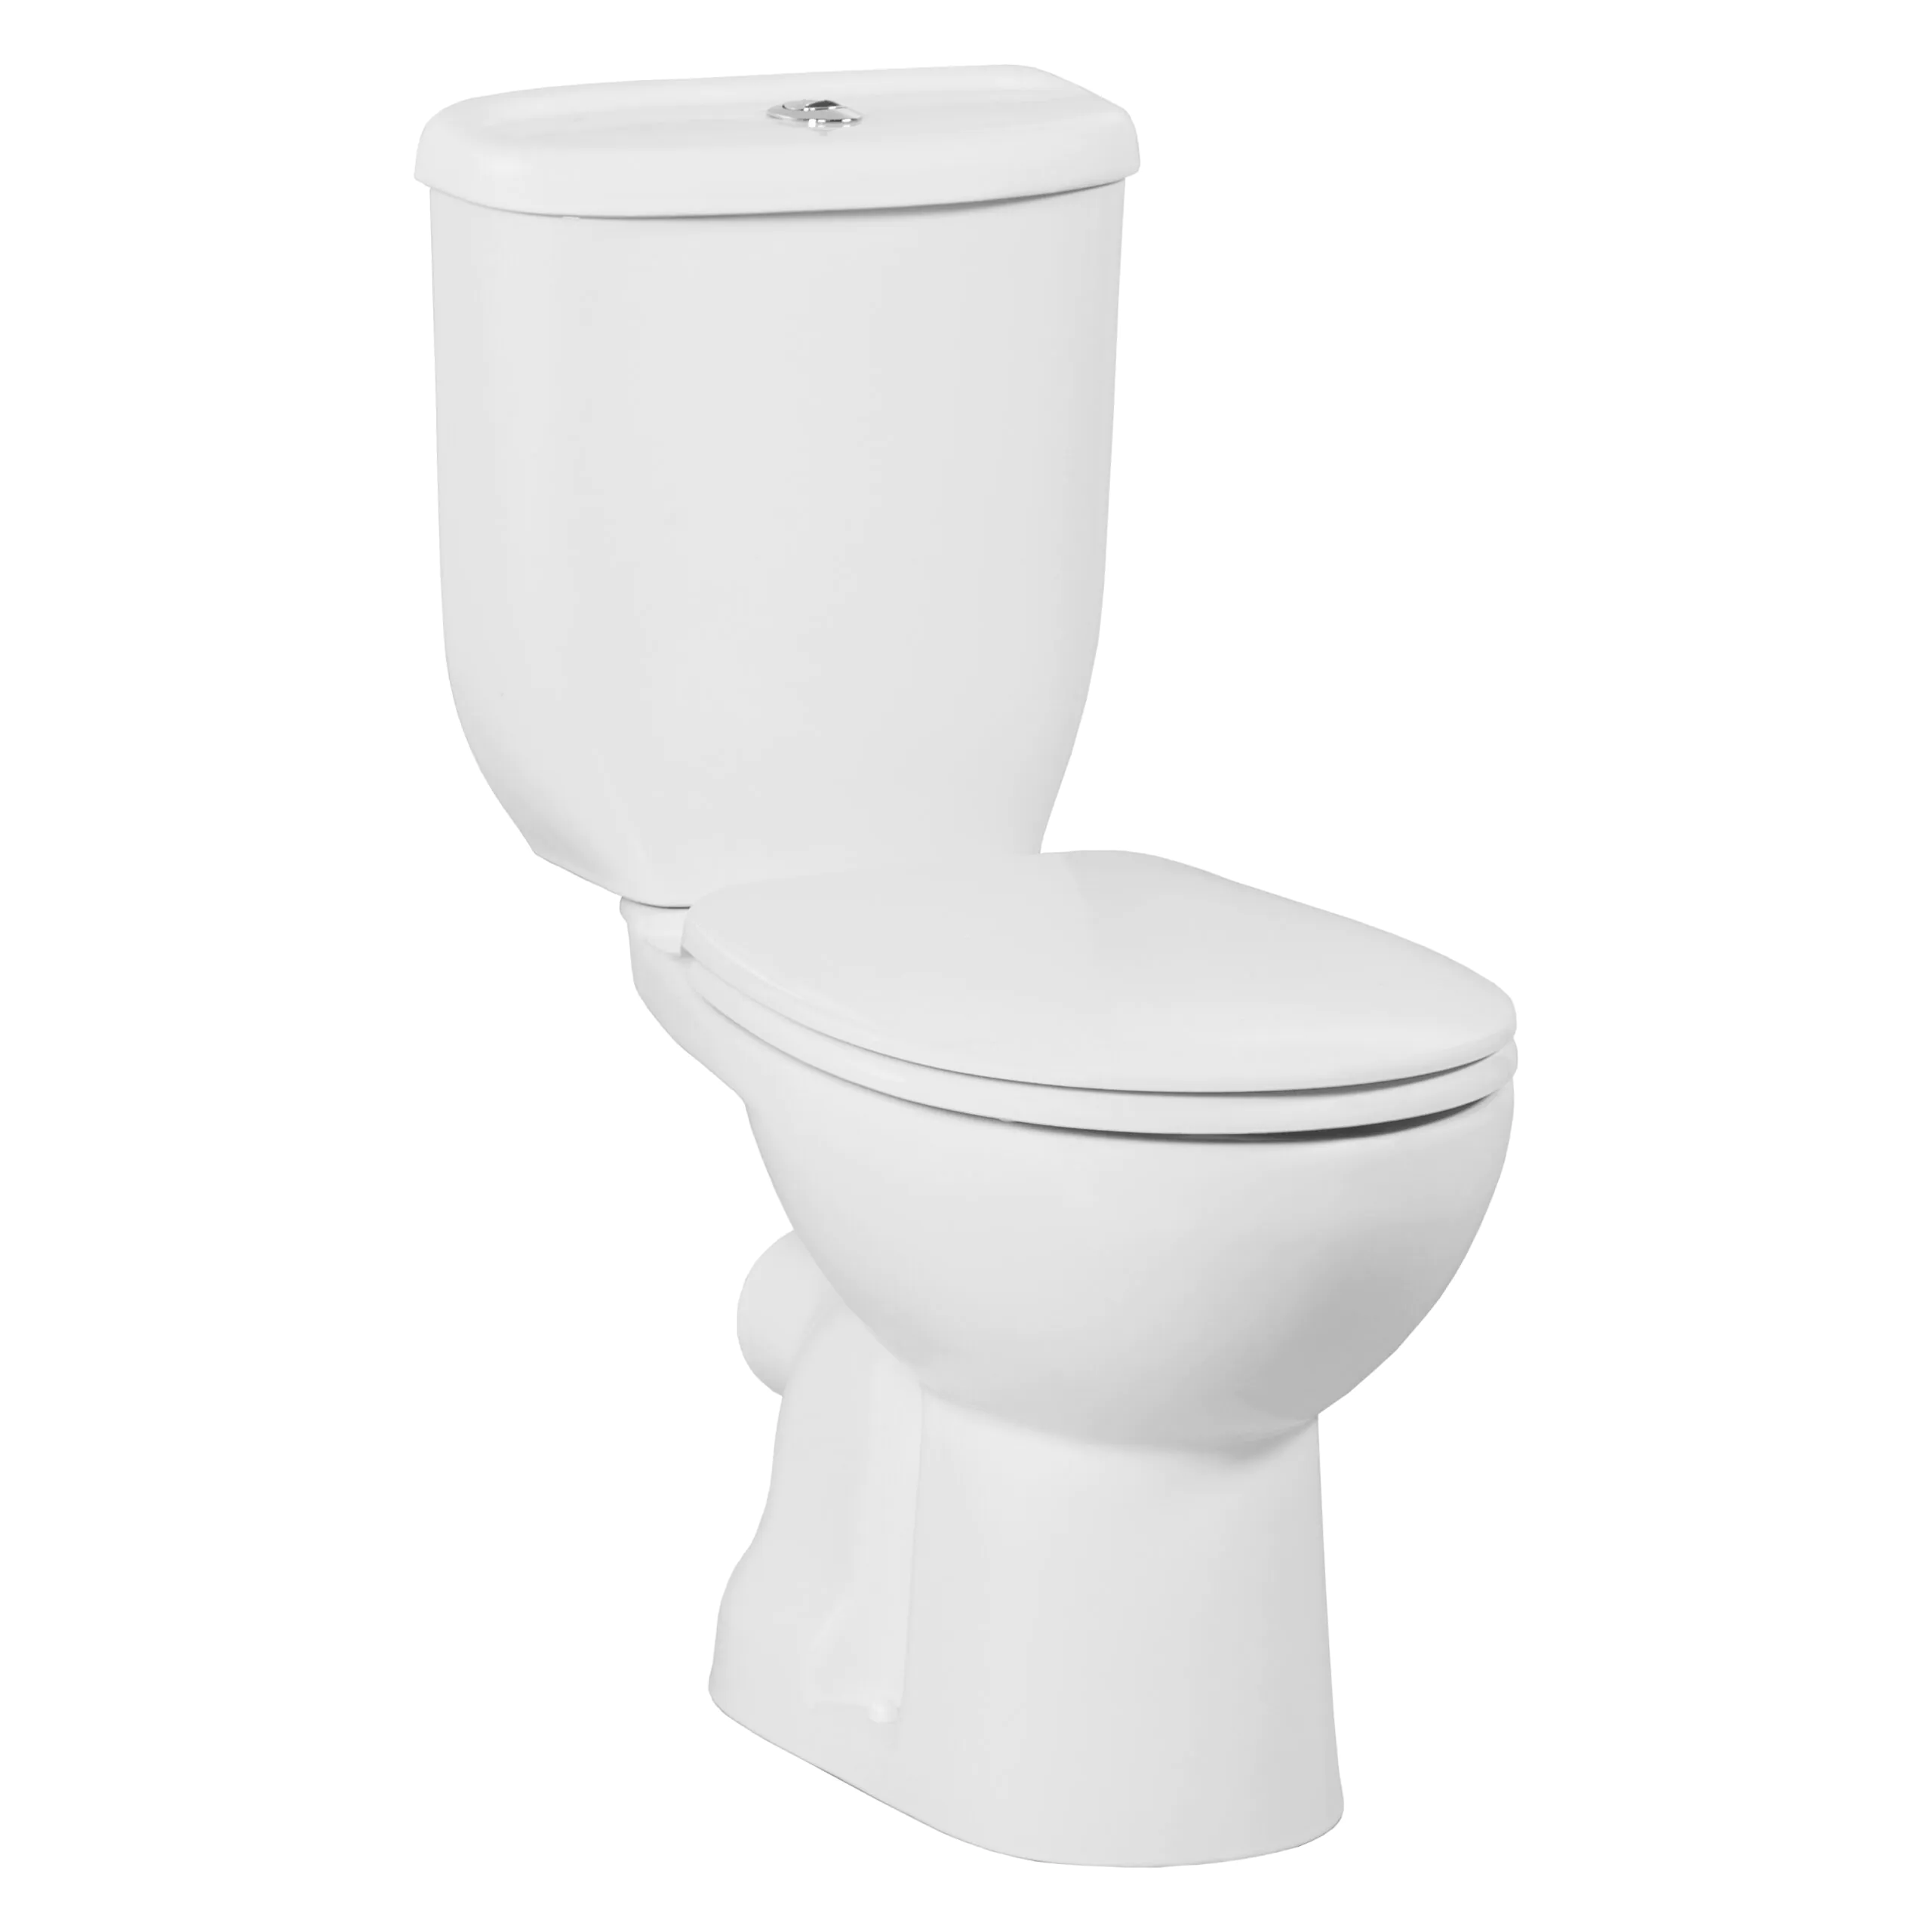 tentoonstelling Controverse Glimmend YDAY sedef duoblok toilet met spoelrand - Zonder bedit wc RVS - Glans wit -  Inclusief zitting & toiletresevoir - staand toilet - Badkamermeubel outlet